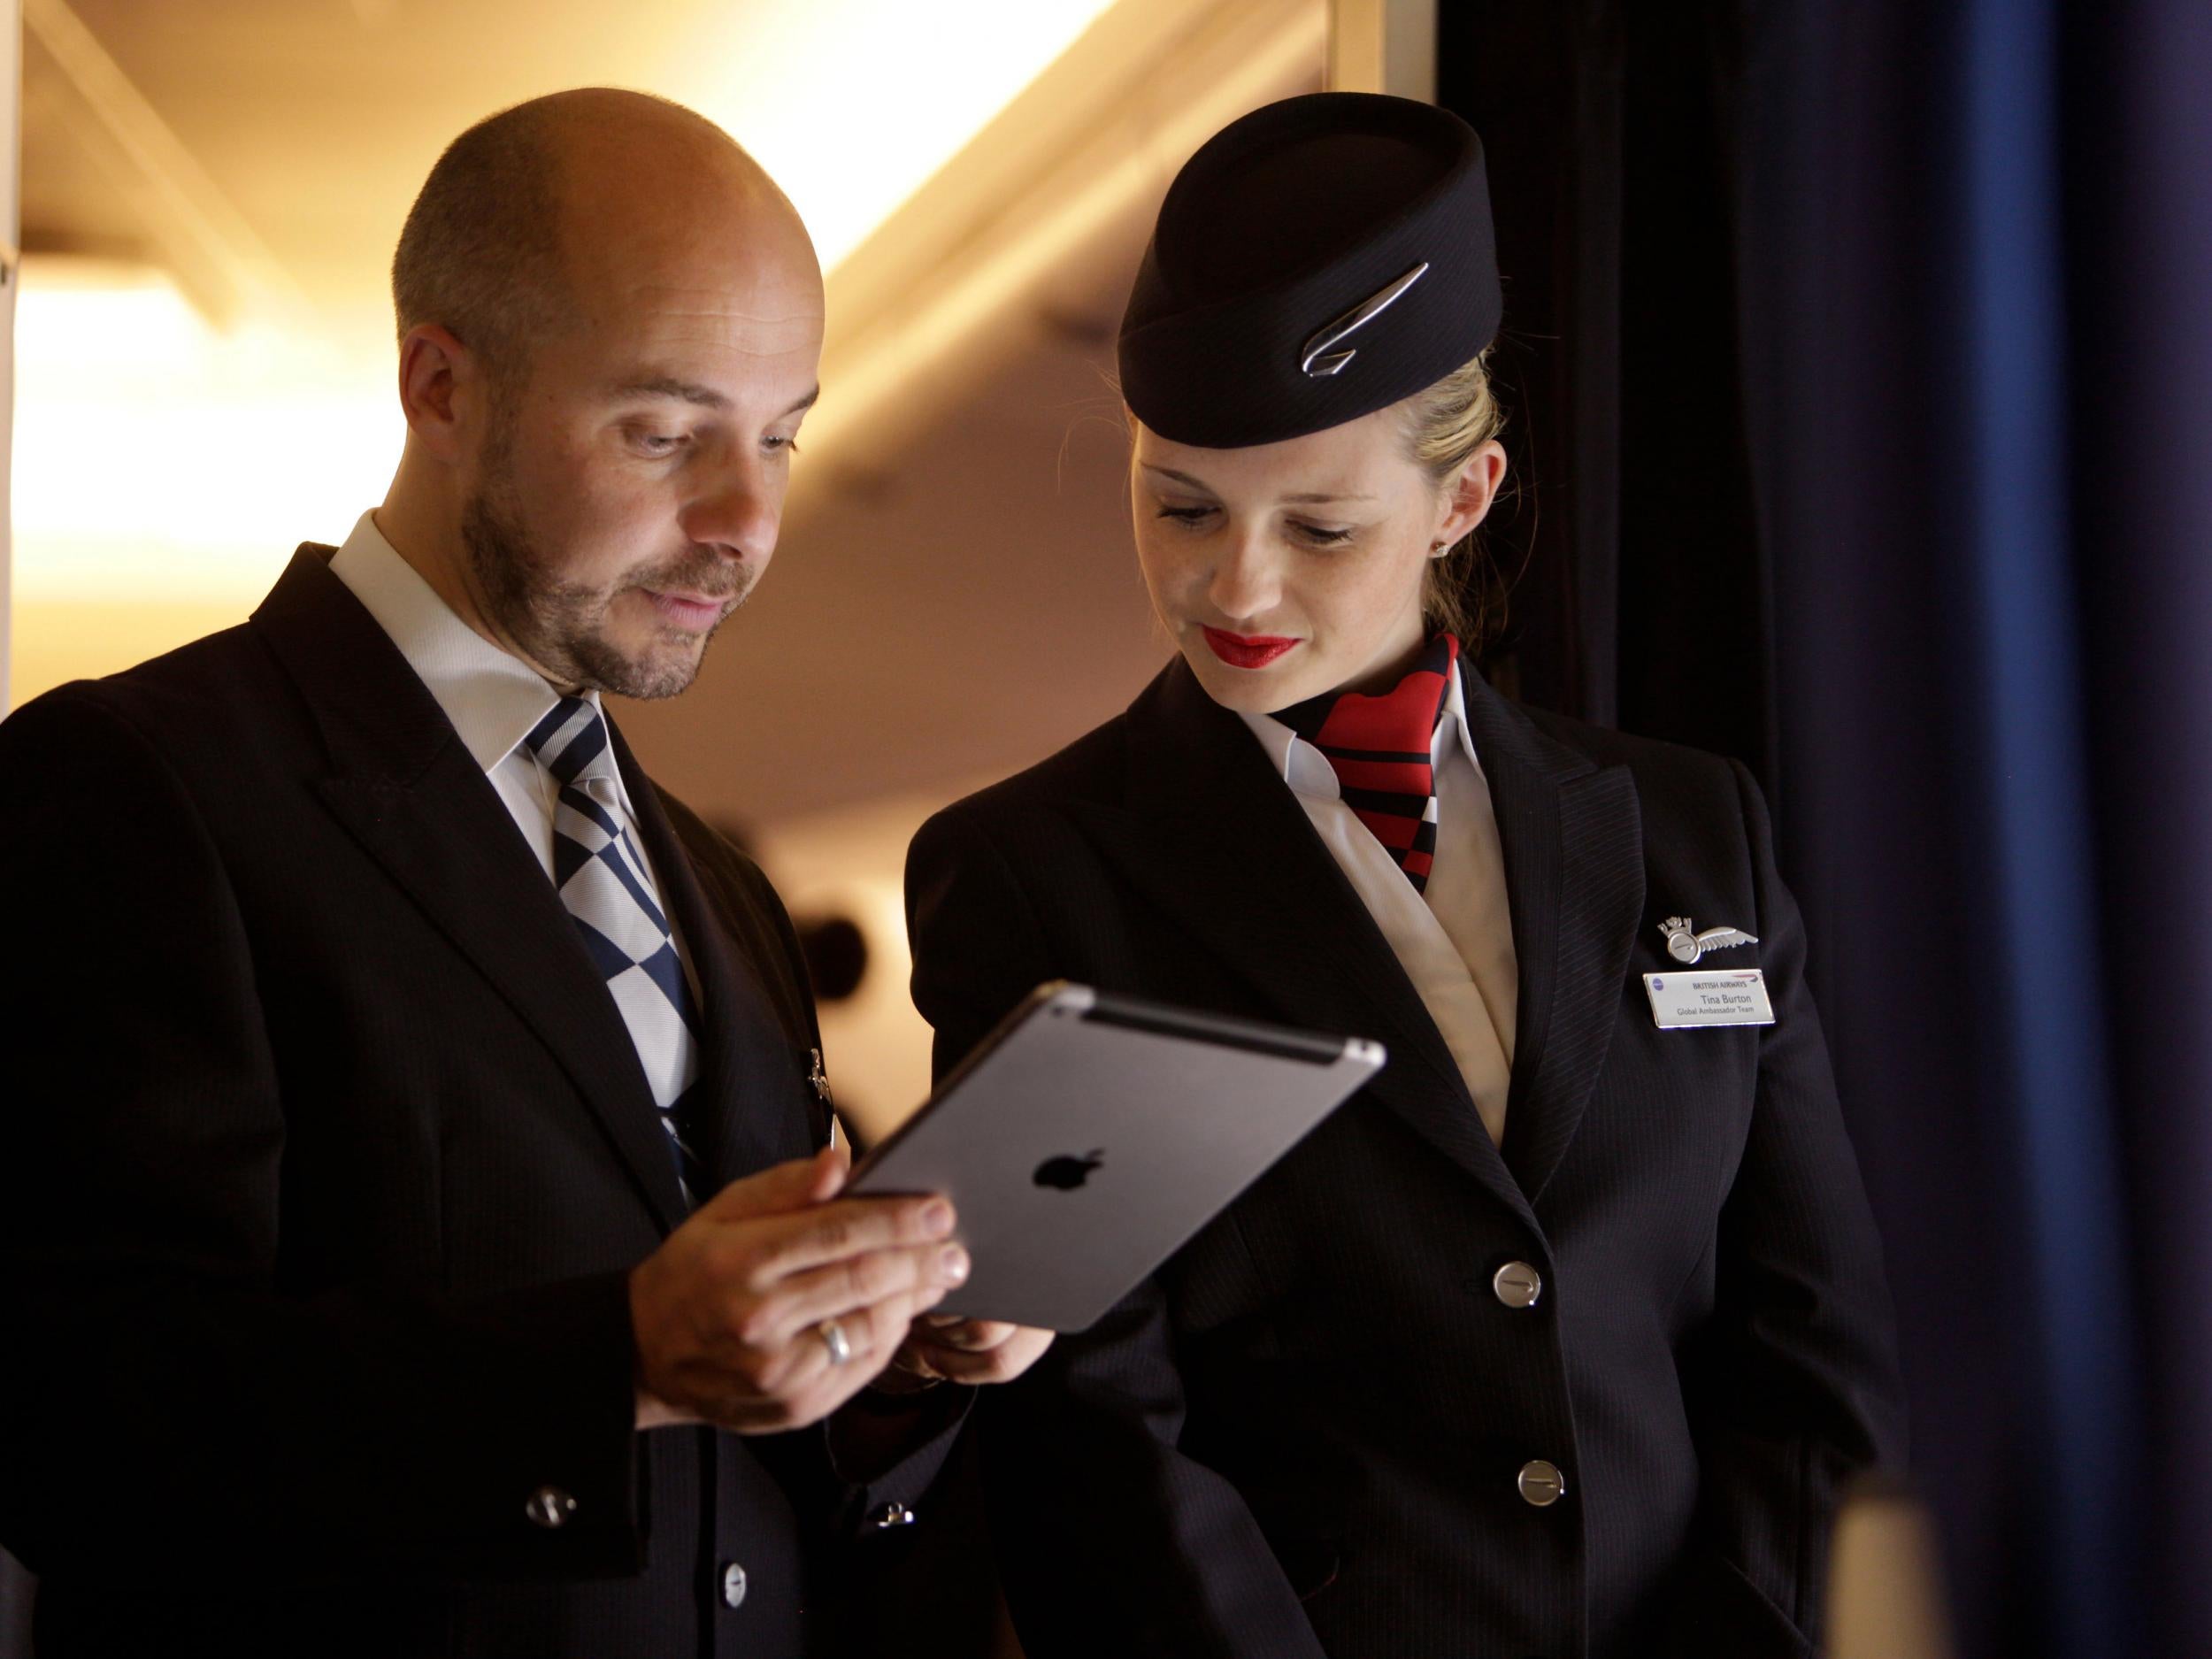 British Airways staff use an iPad to check the passenger list